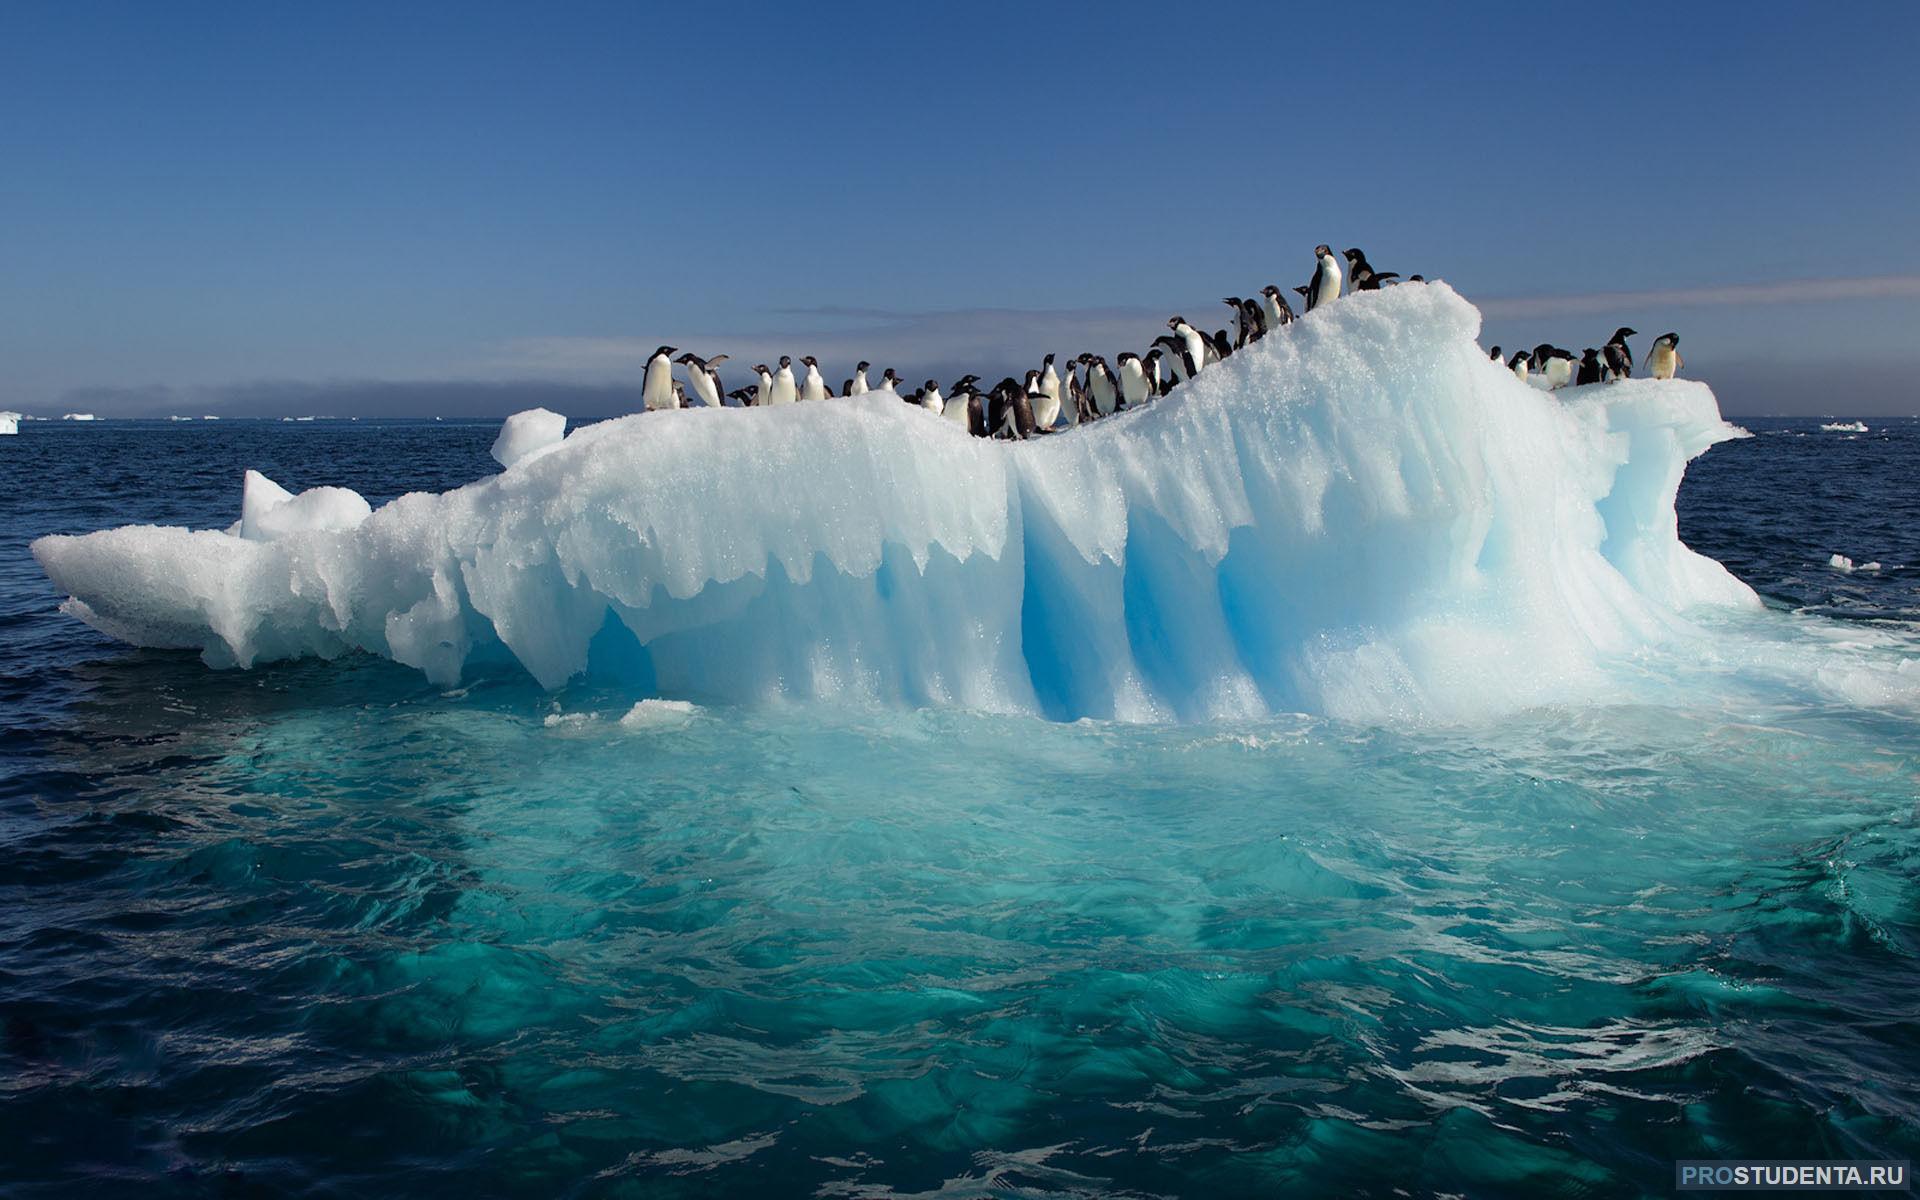 Южный океан природа. Ледники айсберги Антарктиды. Лед Айсберг Арктика Антарктида. Льды и айсберги в Антарктиде. Южный антарктический океан.